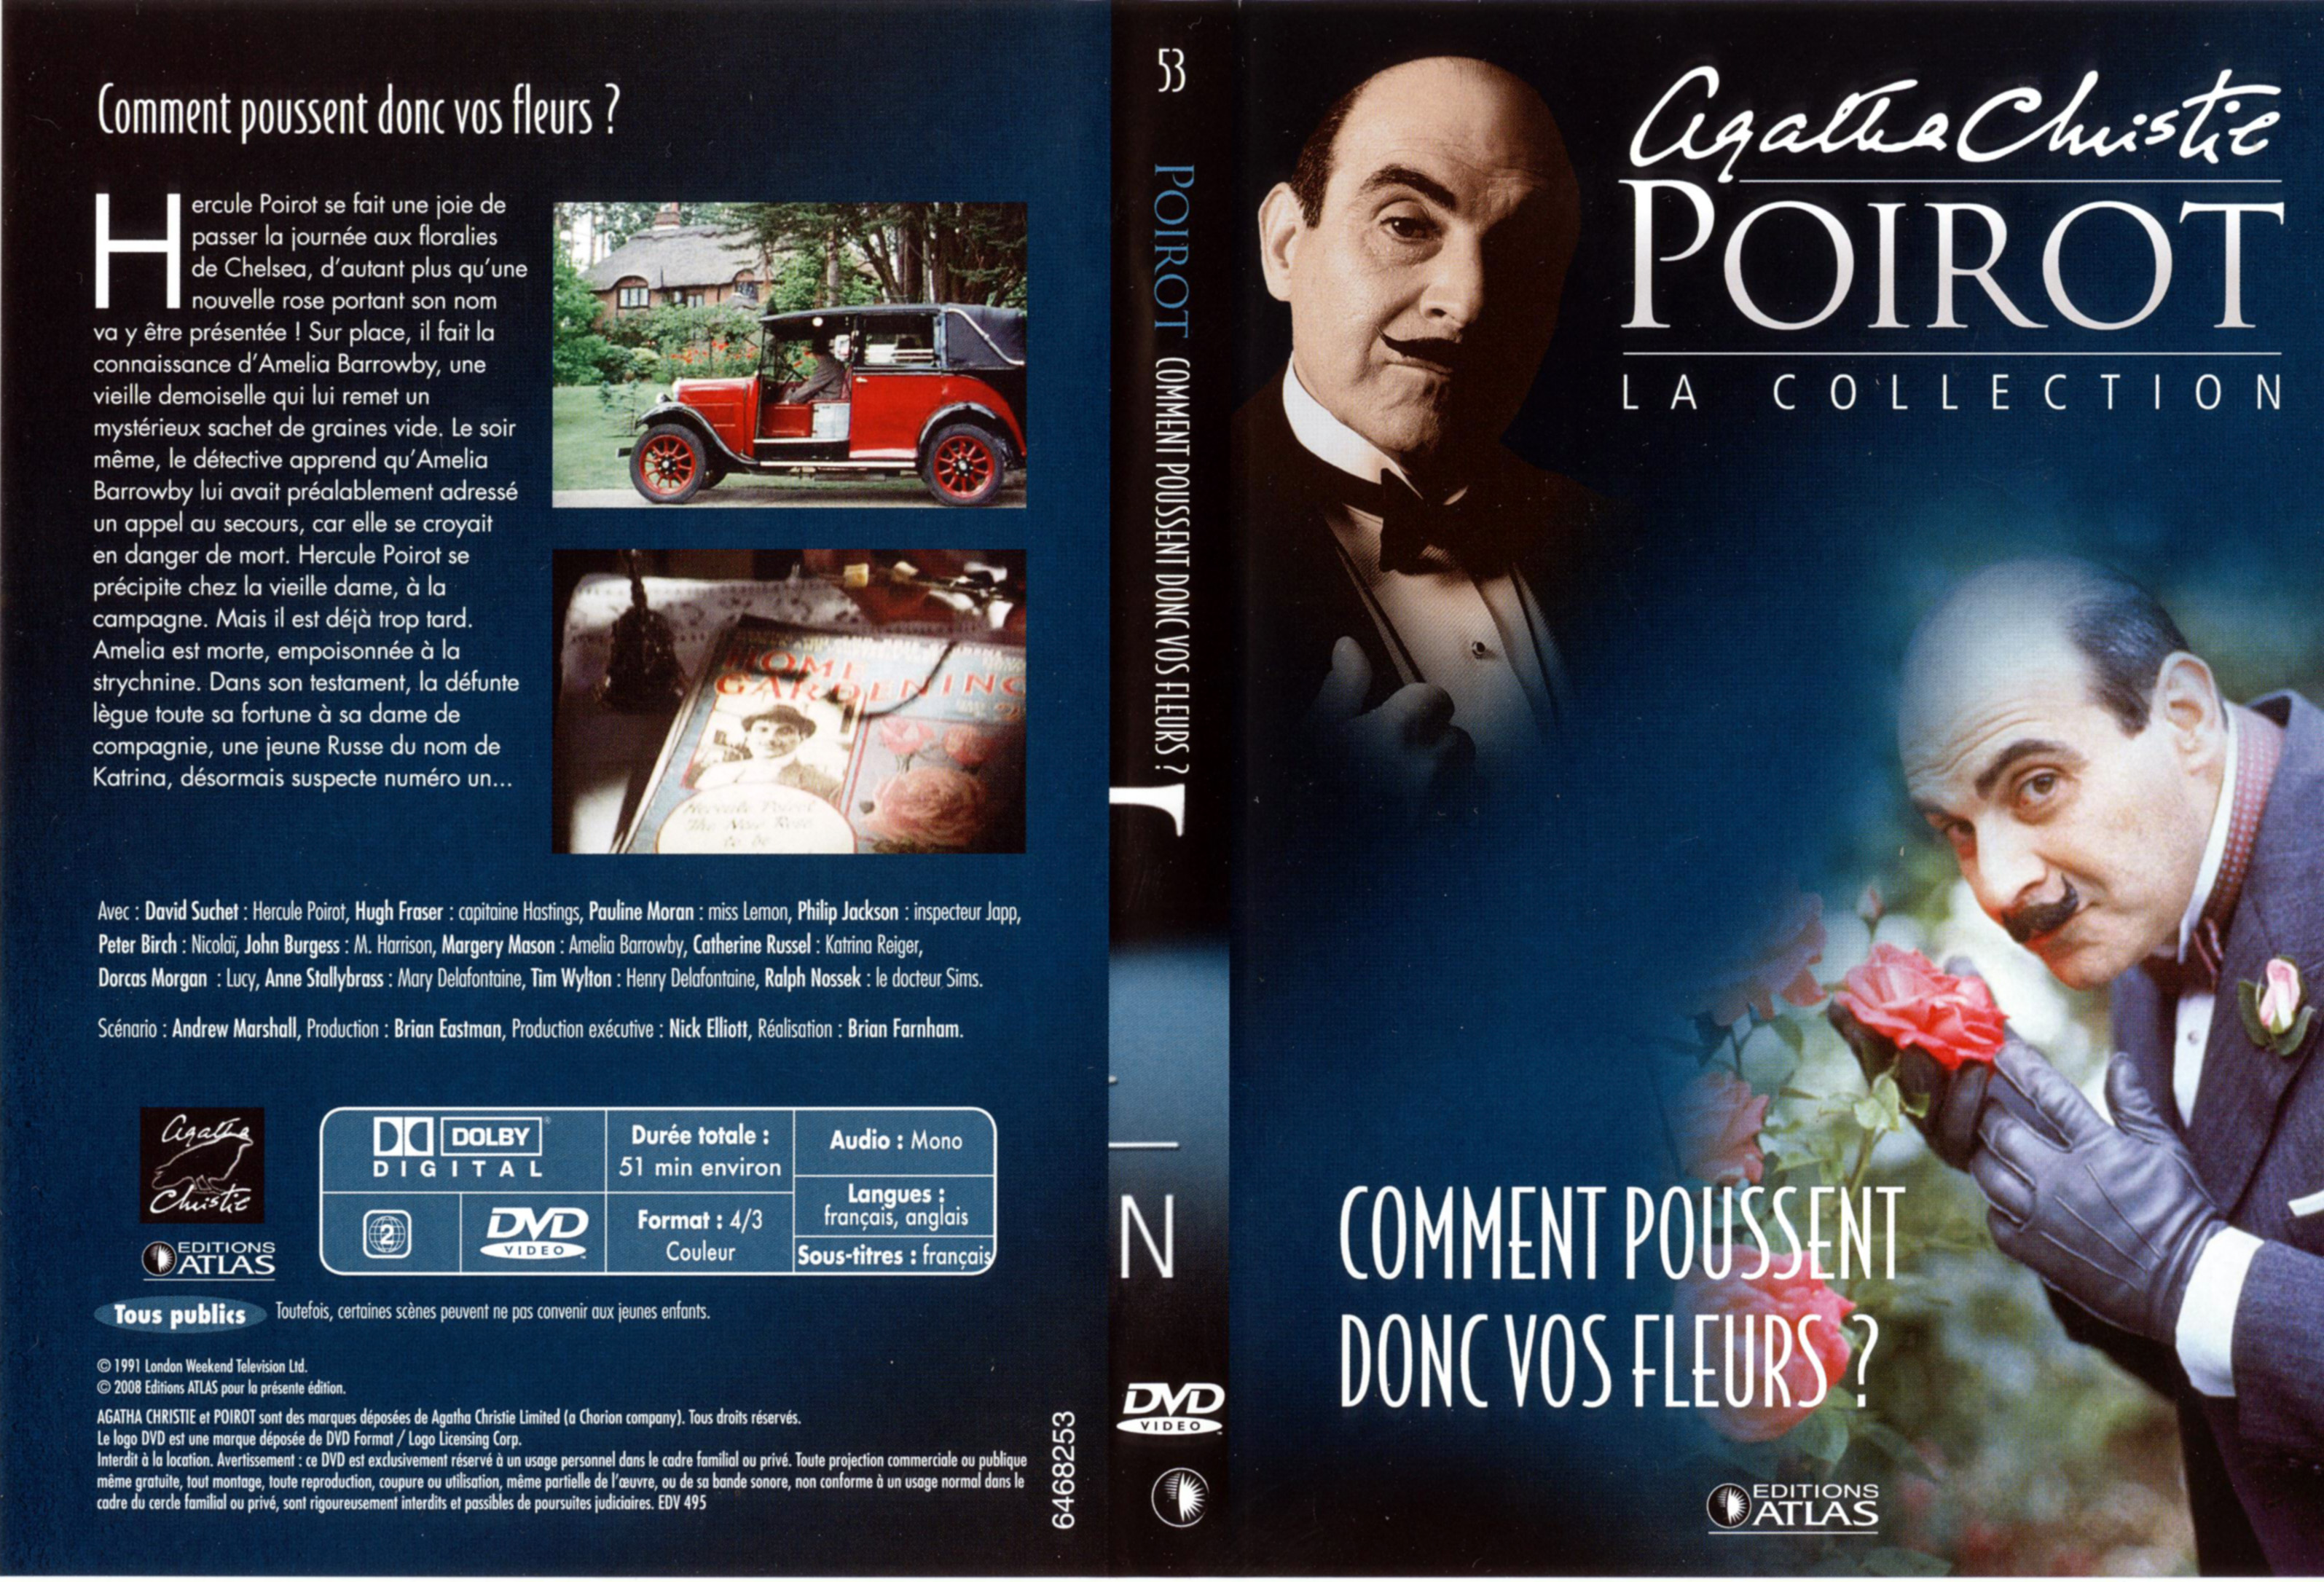 Jaquette DVD Hercule Poirot vol 53